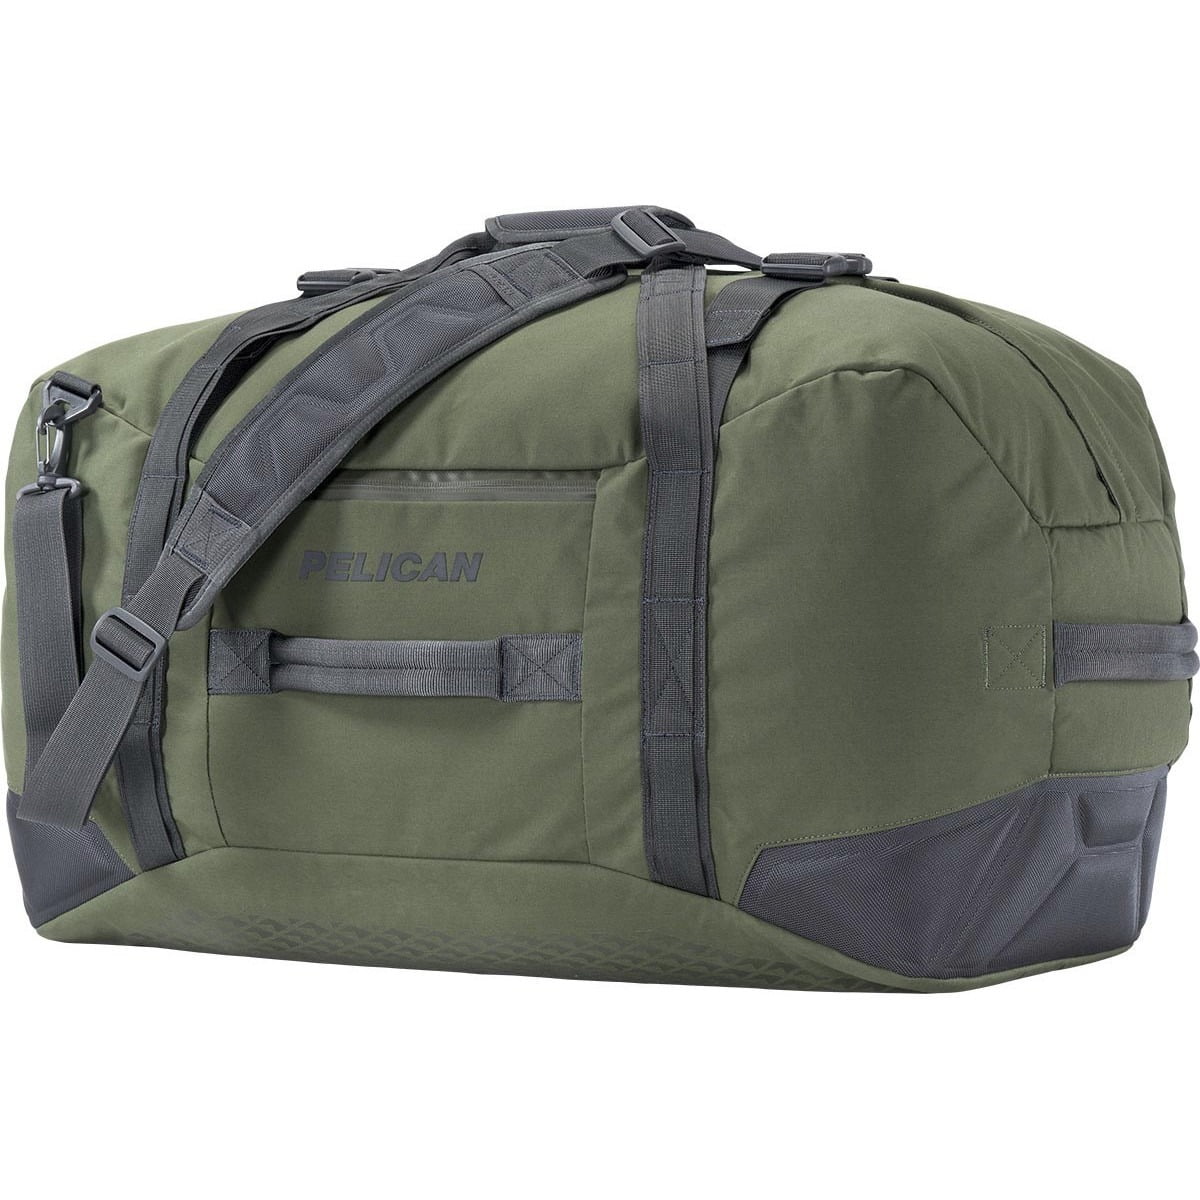 Pelican SL-MPD100-OD 100-Liter Water-Resistant Duffel Bag (Olive Drab ...